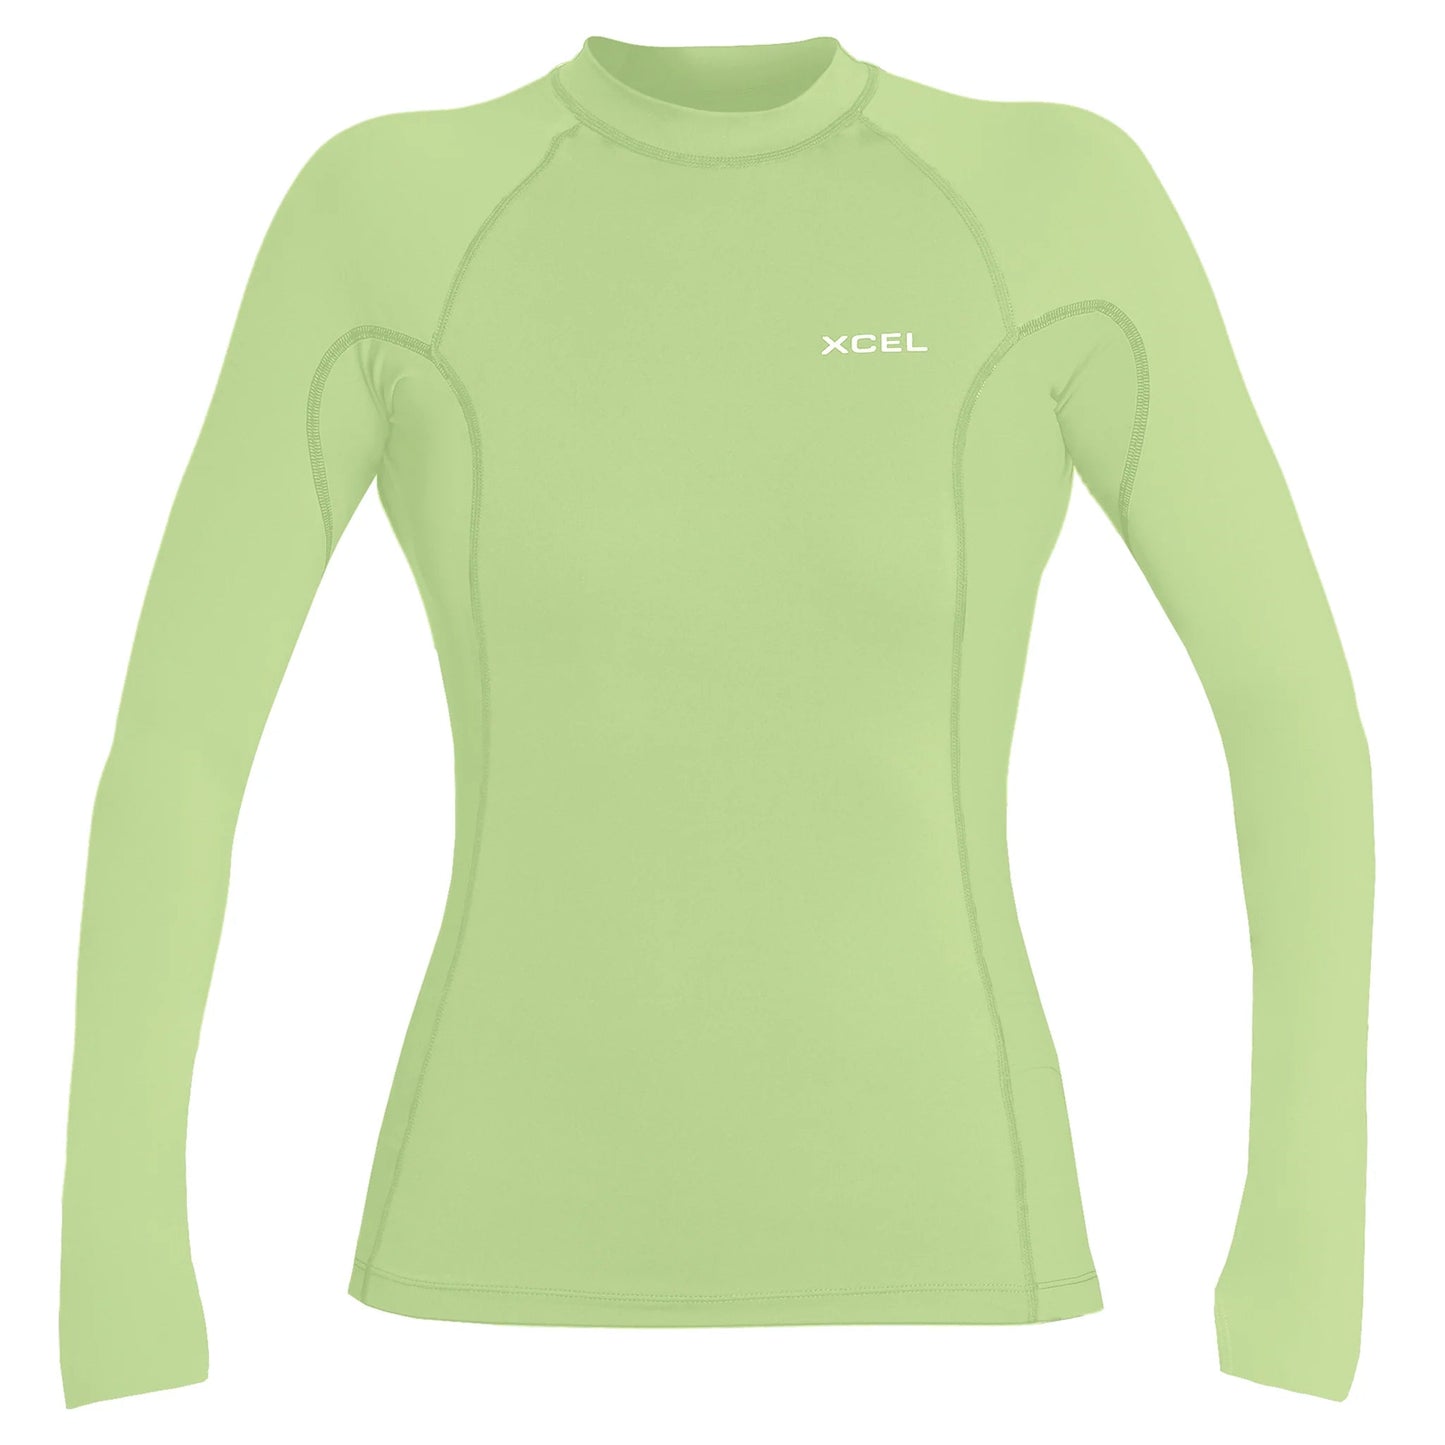 XCEL Women's Premium Stretch Performance Fit Long Sleeve UV Top Rashguard XCEL WETSUITS 